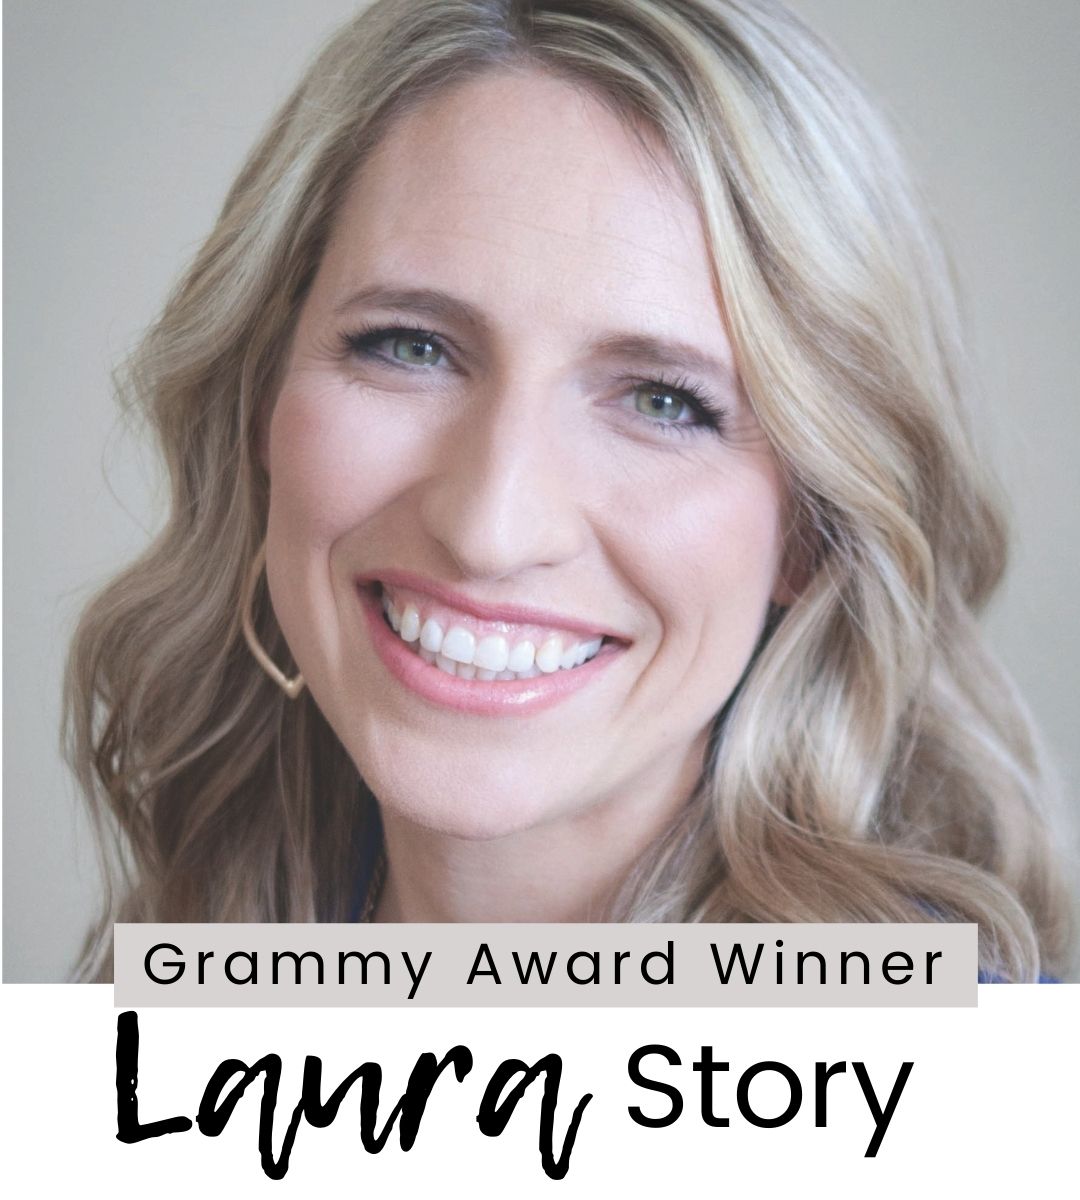 Laura Story